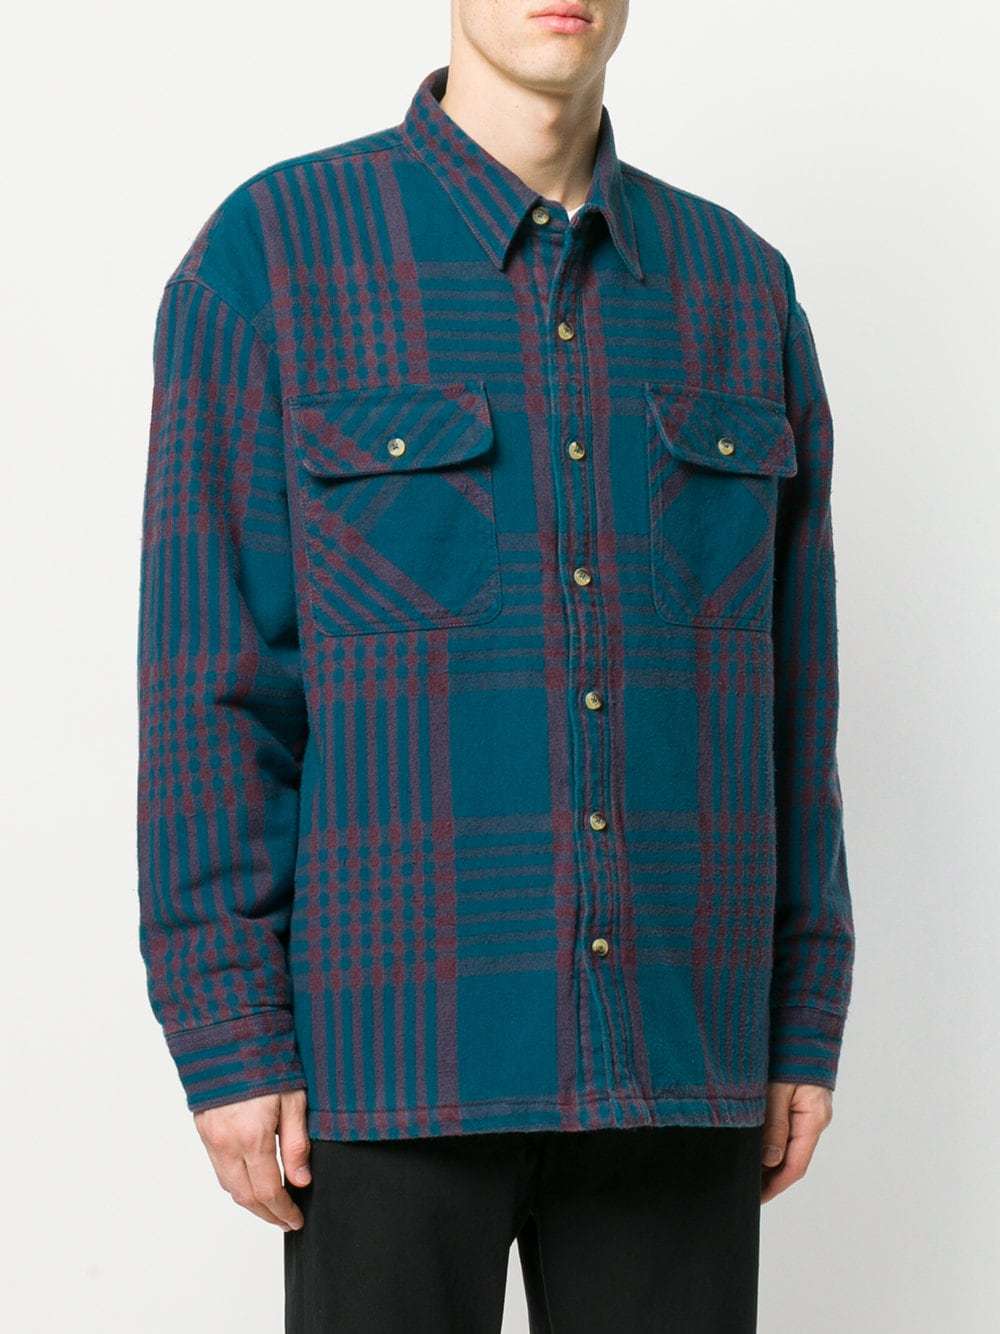 yeezy season 5 classic flannel shirt - ブルゾン